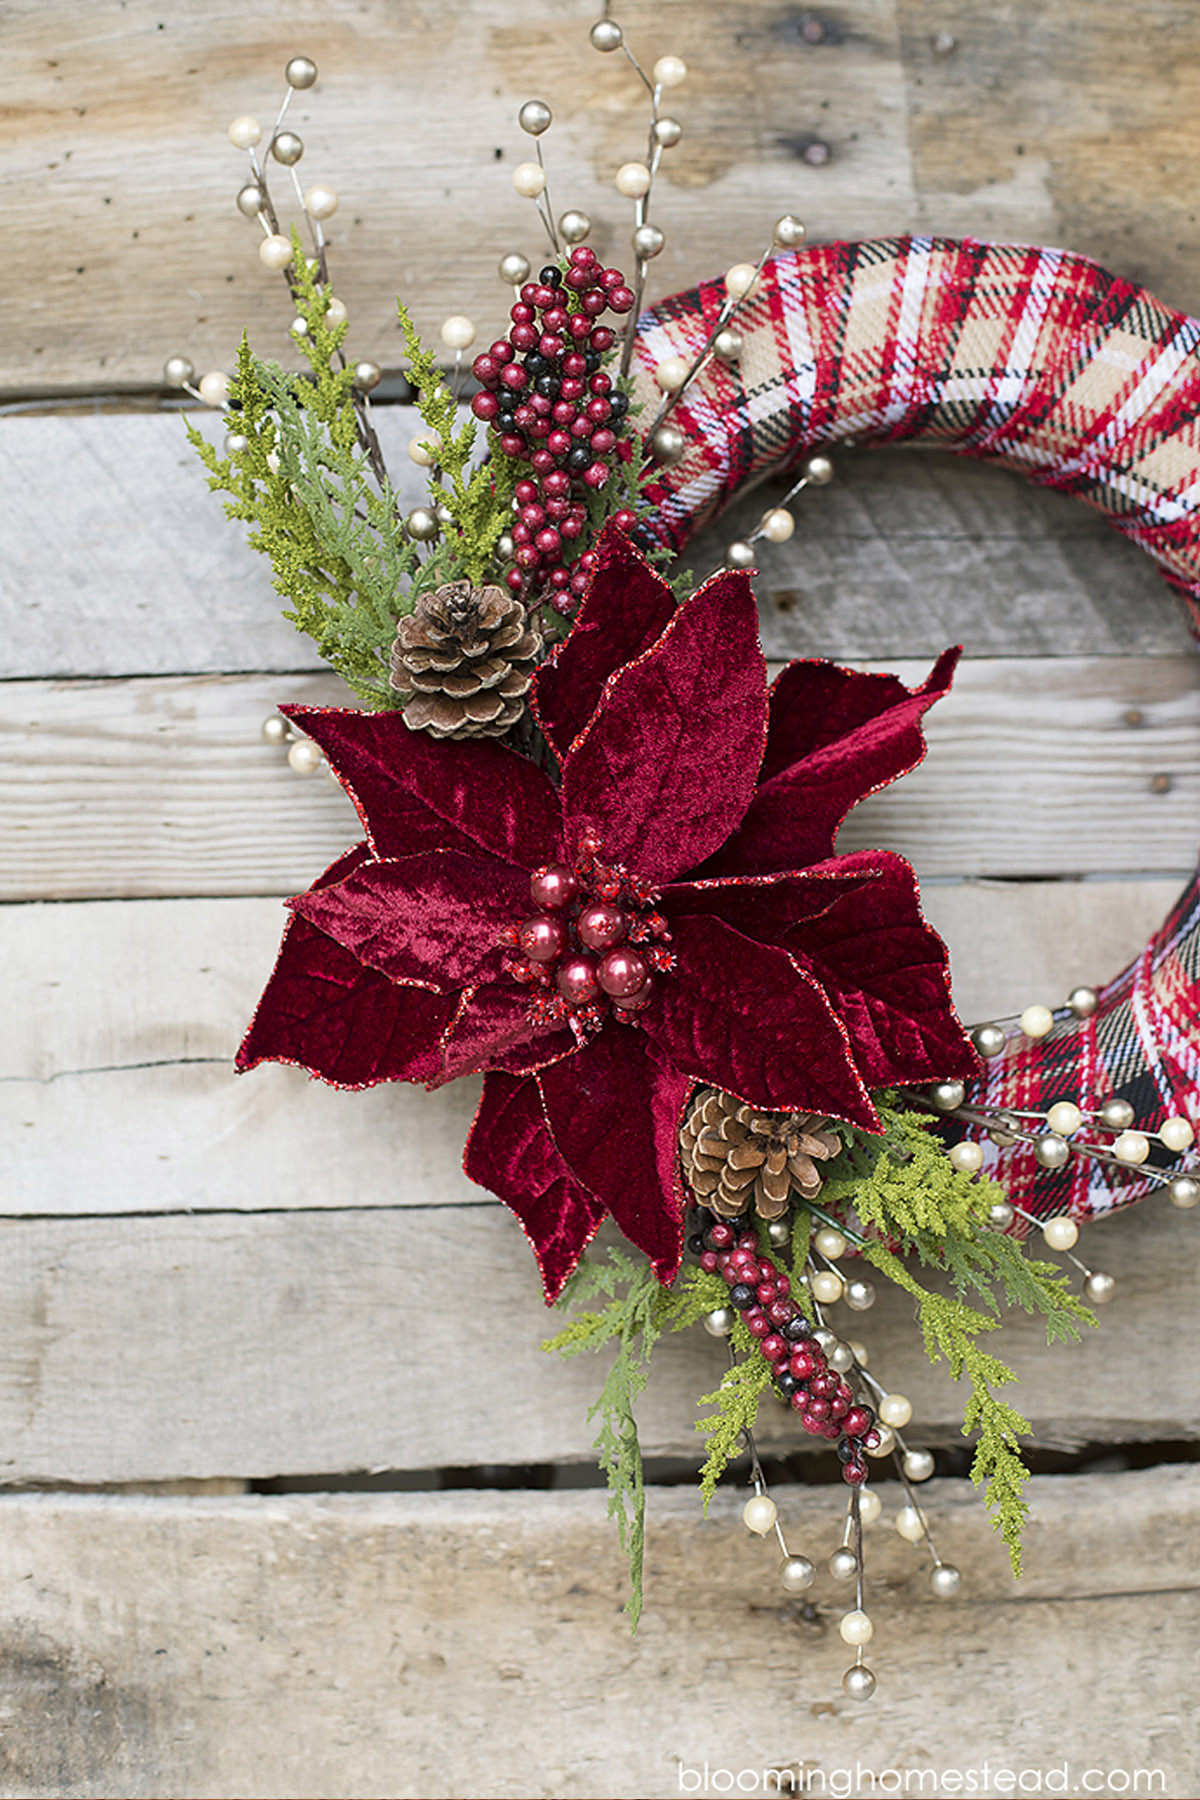 DIY Christmas Decorations Pinterest
 40 DIY Christmas Wreath Ideas How To Make a Homemade